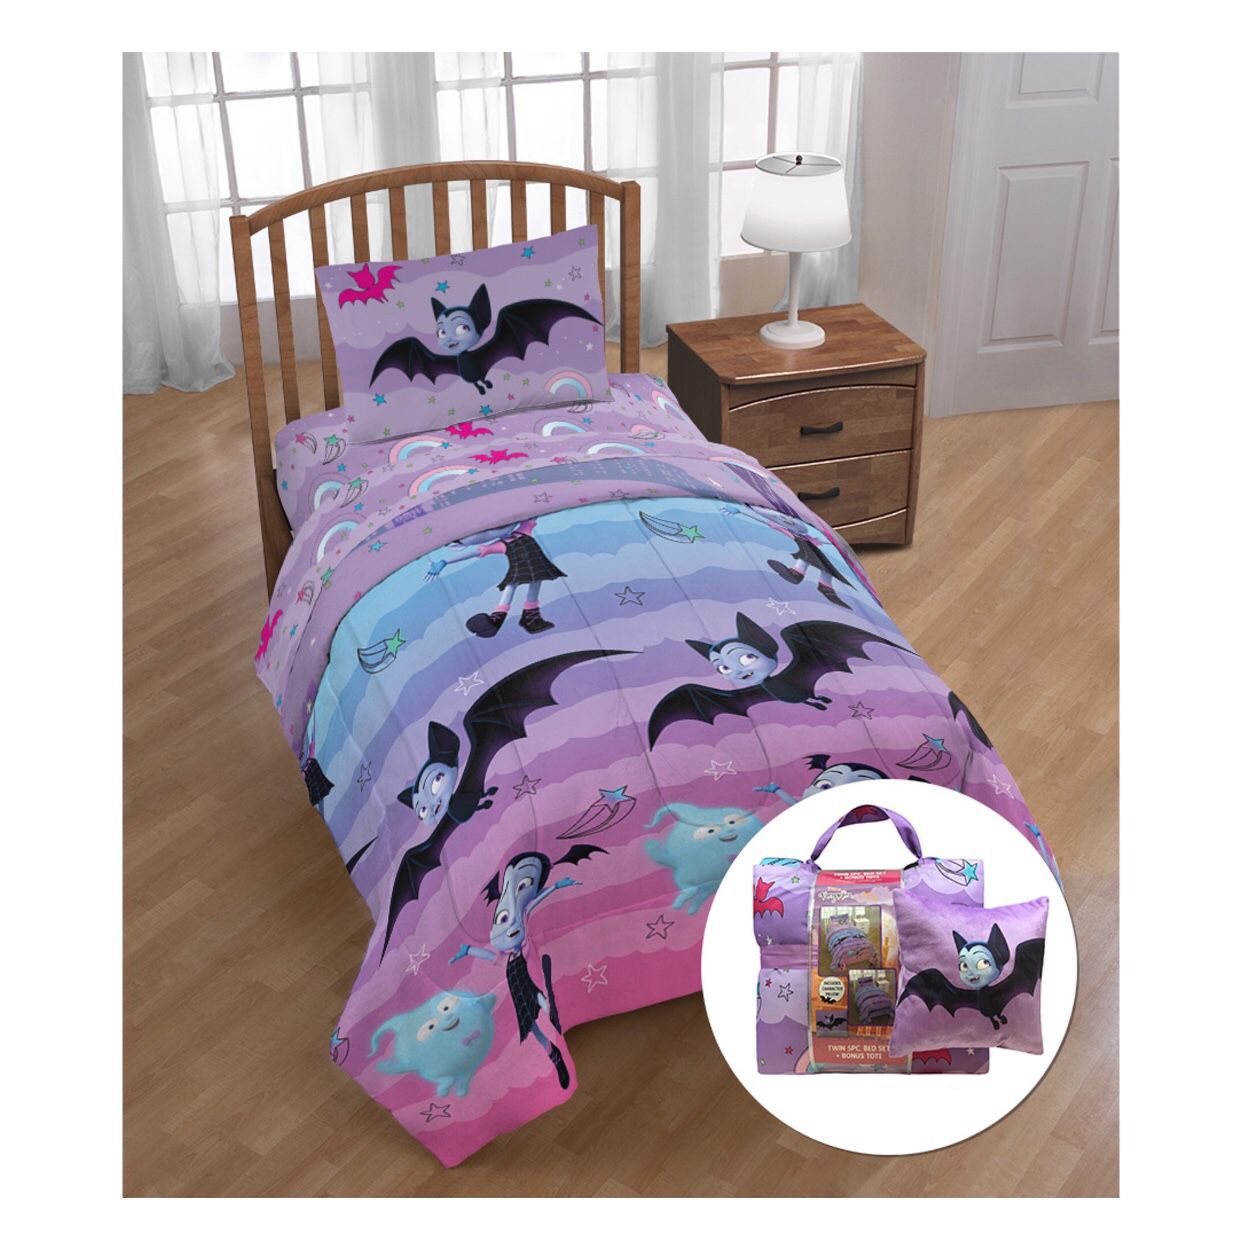 Vampirina Rainbow 6 Piece Bed Set with Bonus Tote and Decorative Pillow - Twin